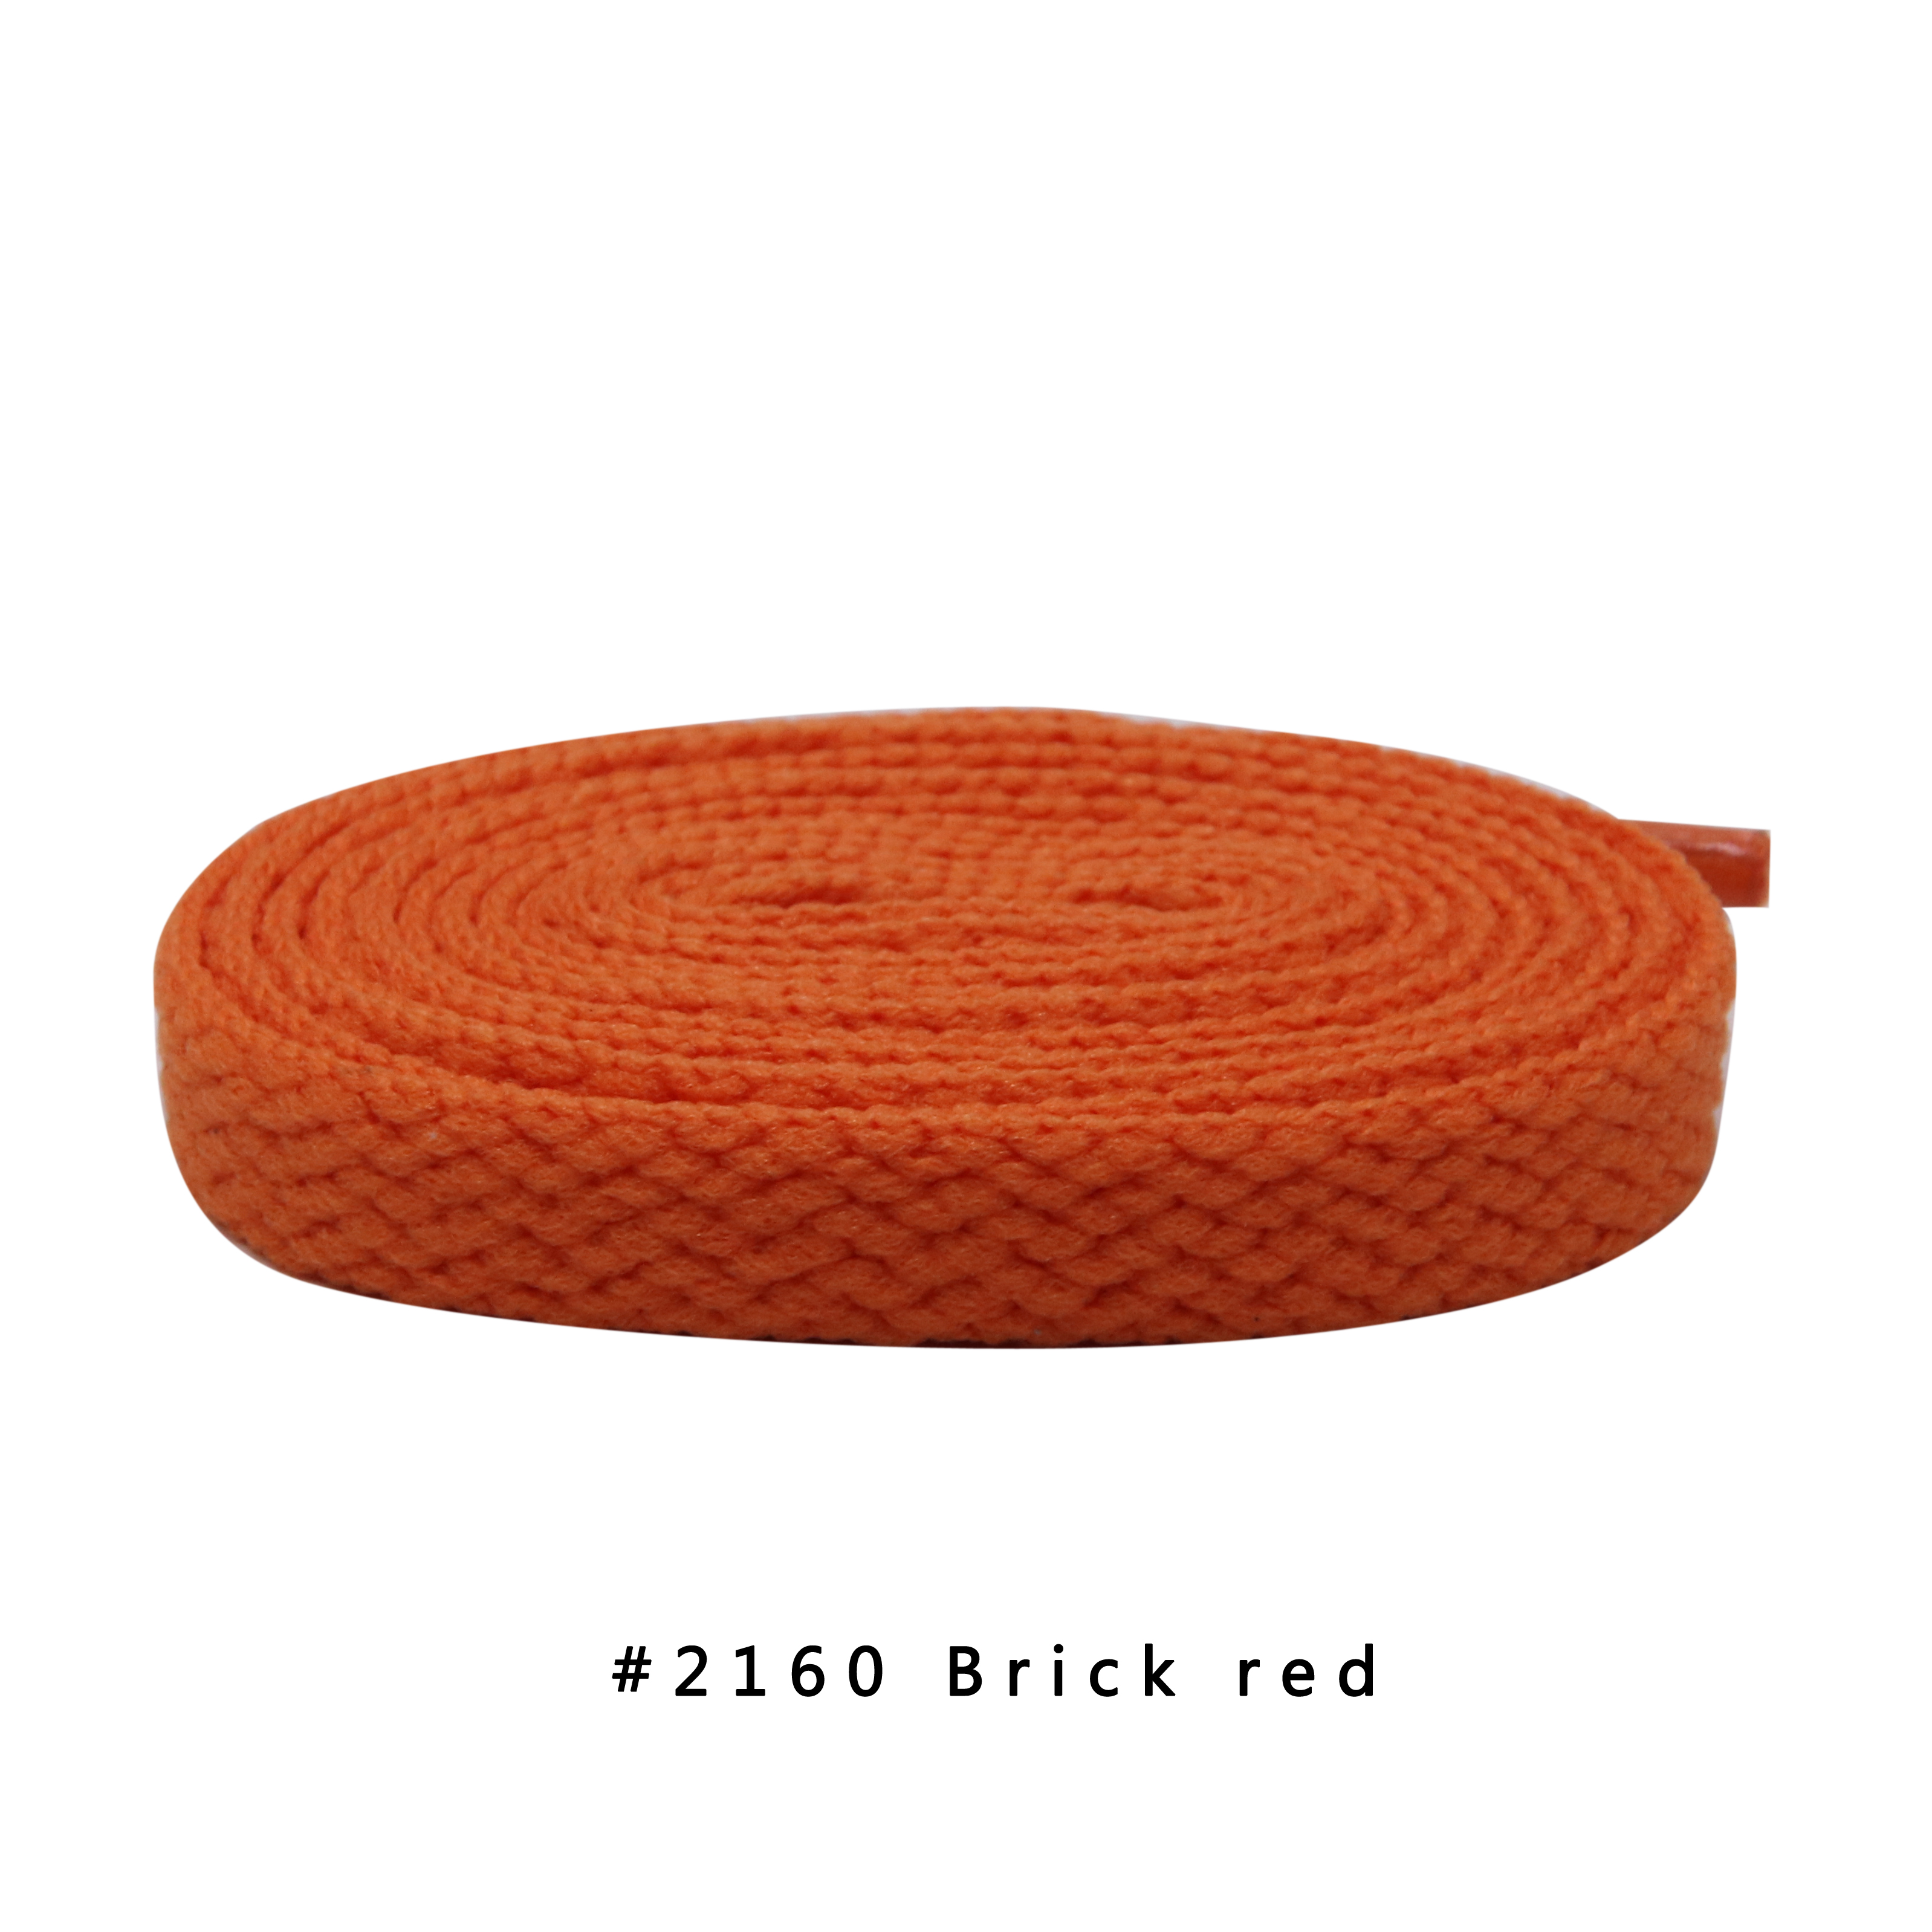 #2160 Brick red